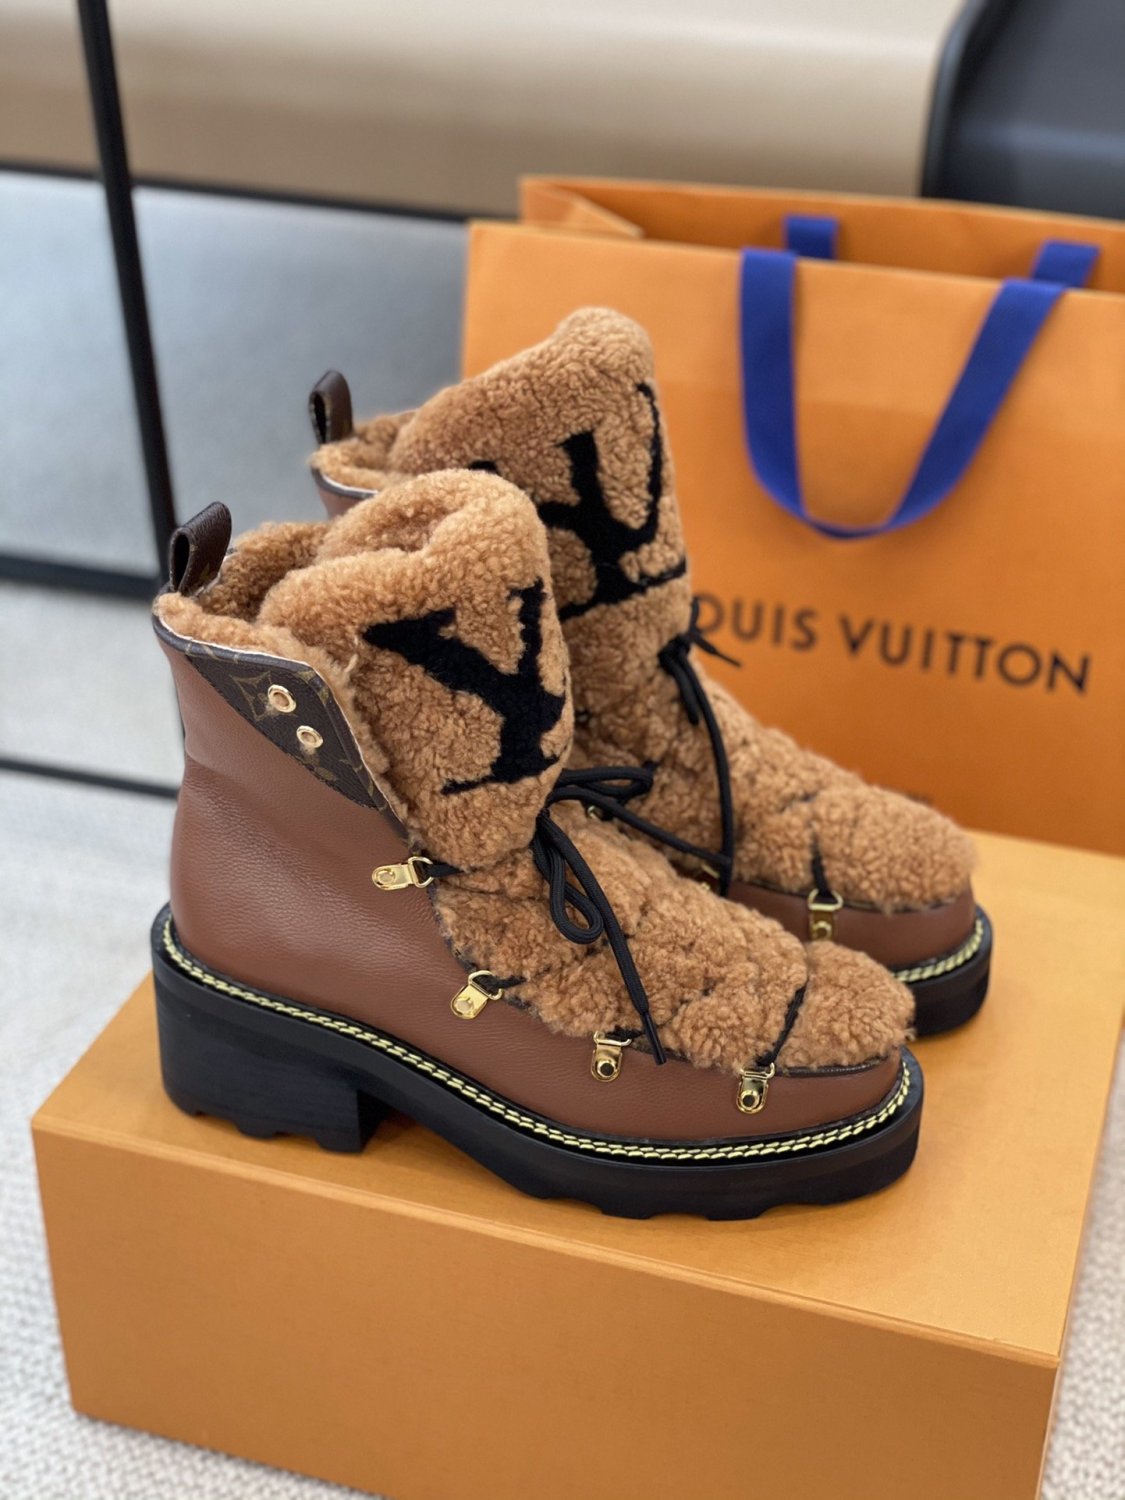 Louis Vuitton Monogram LV Beaubourg Ankle Boot, Black, 35